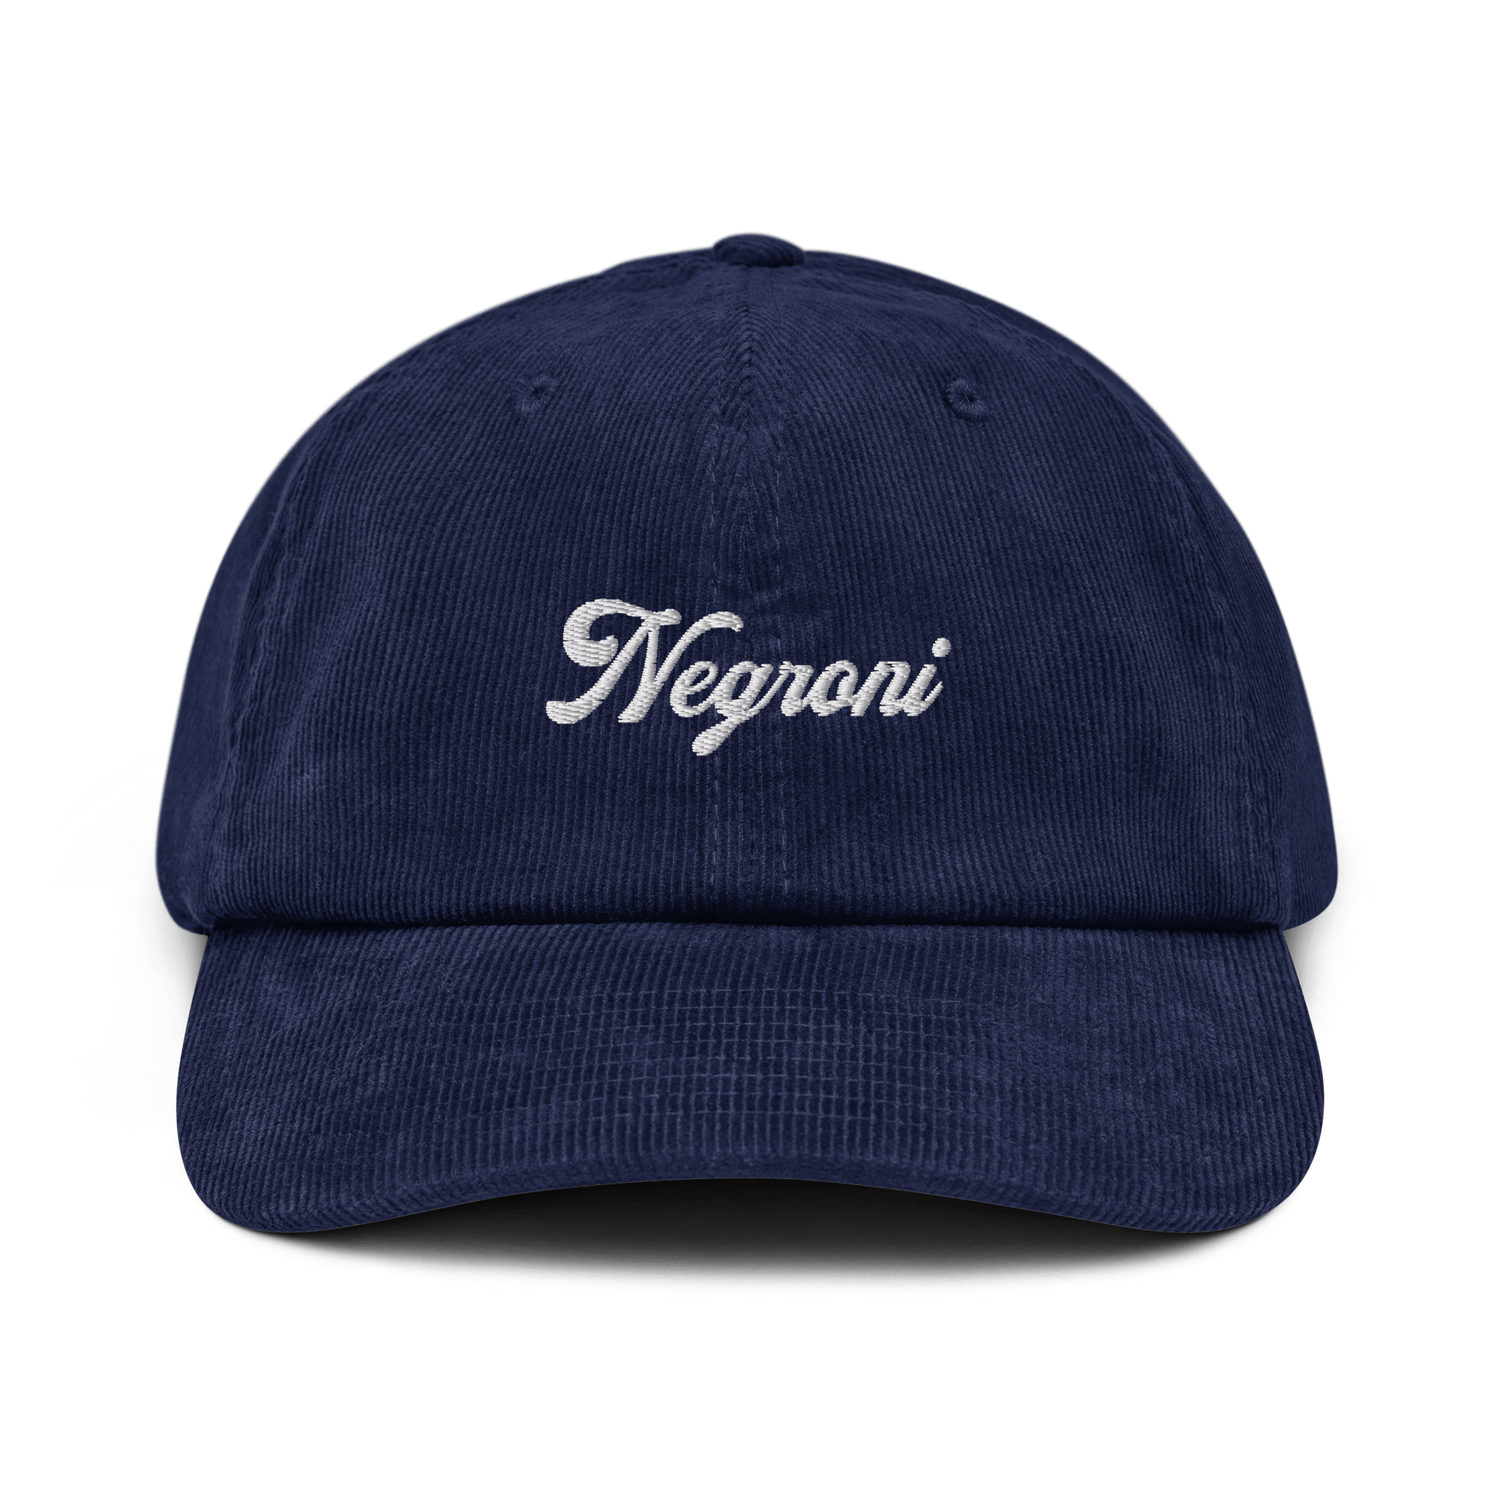 The Negroni Script Corduroy hat